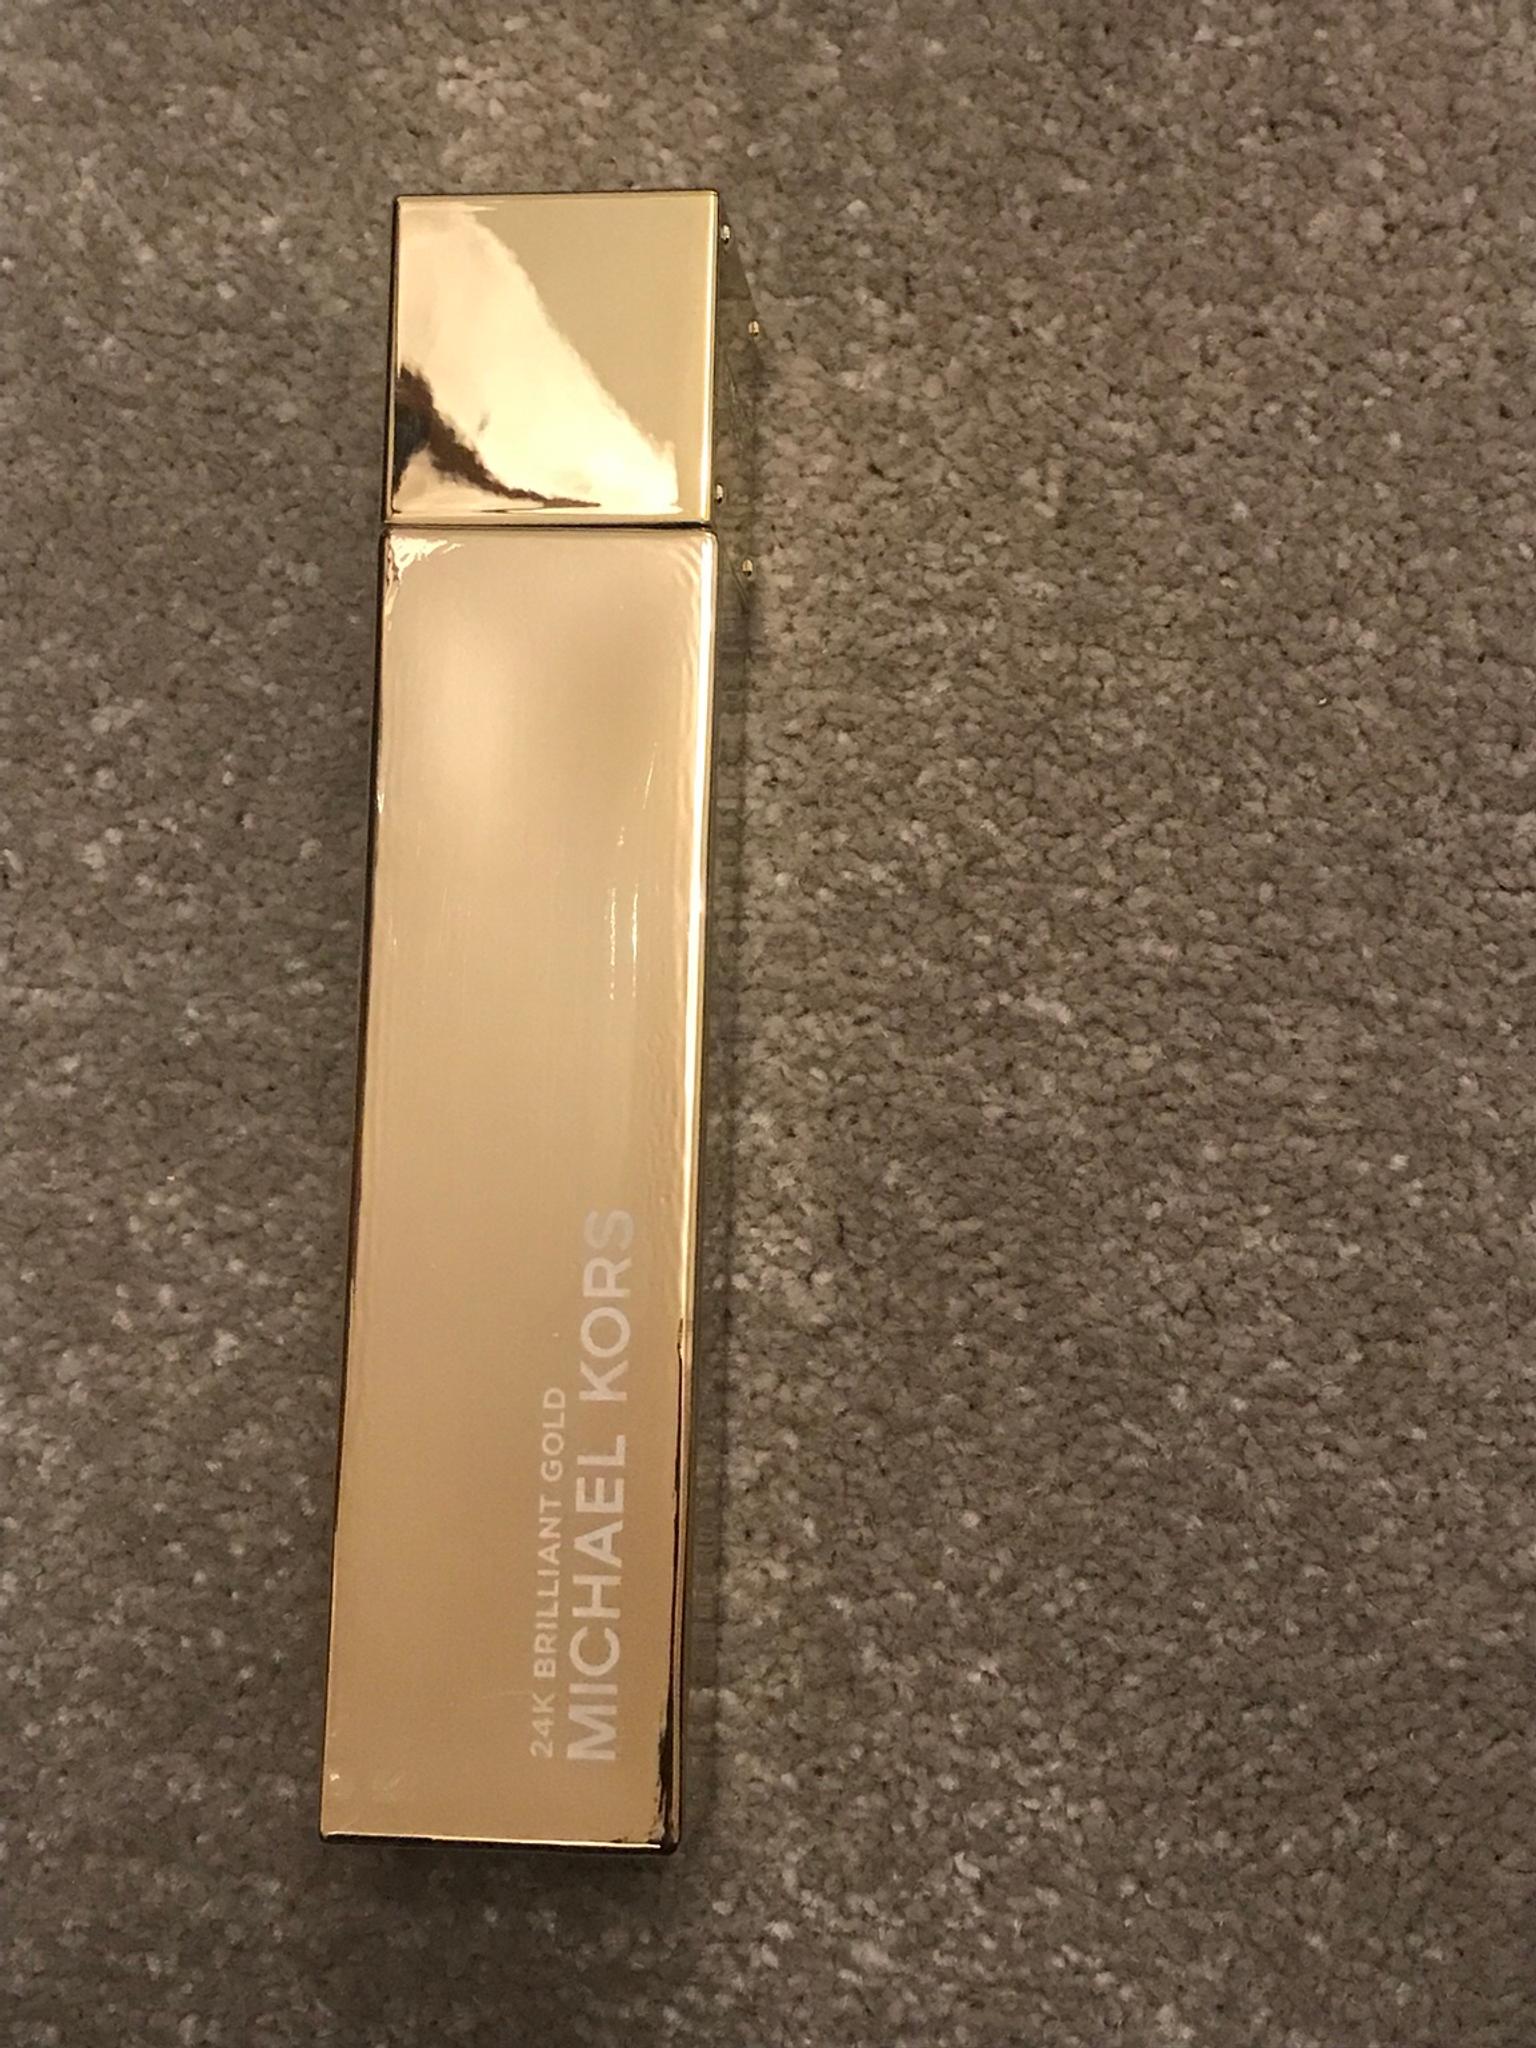 michael kors brilliant gold perfume review